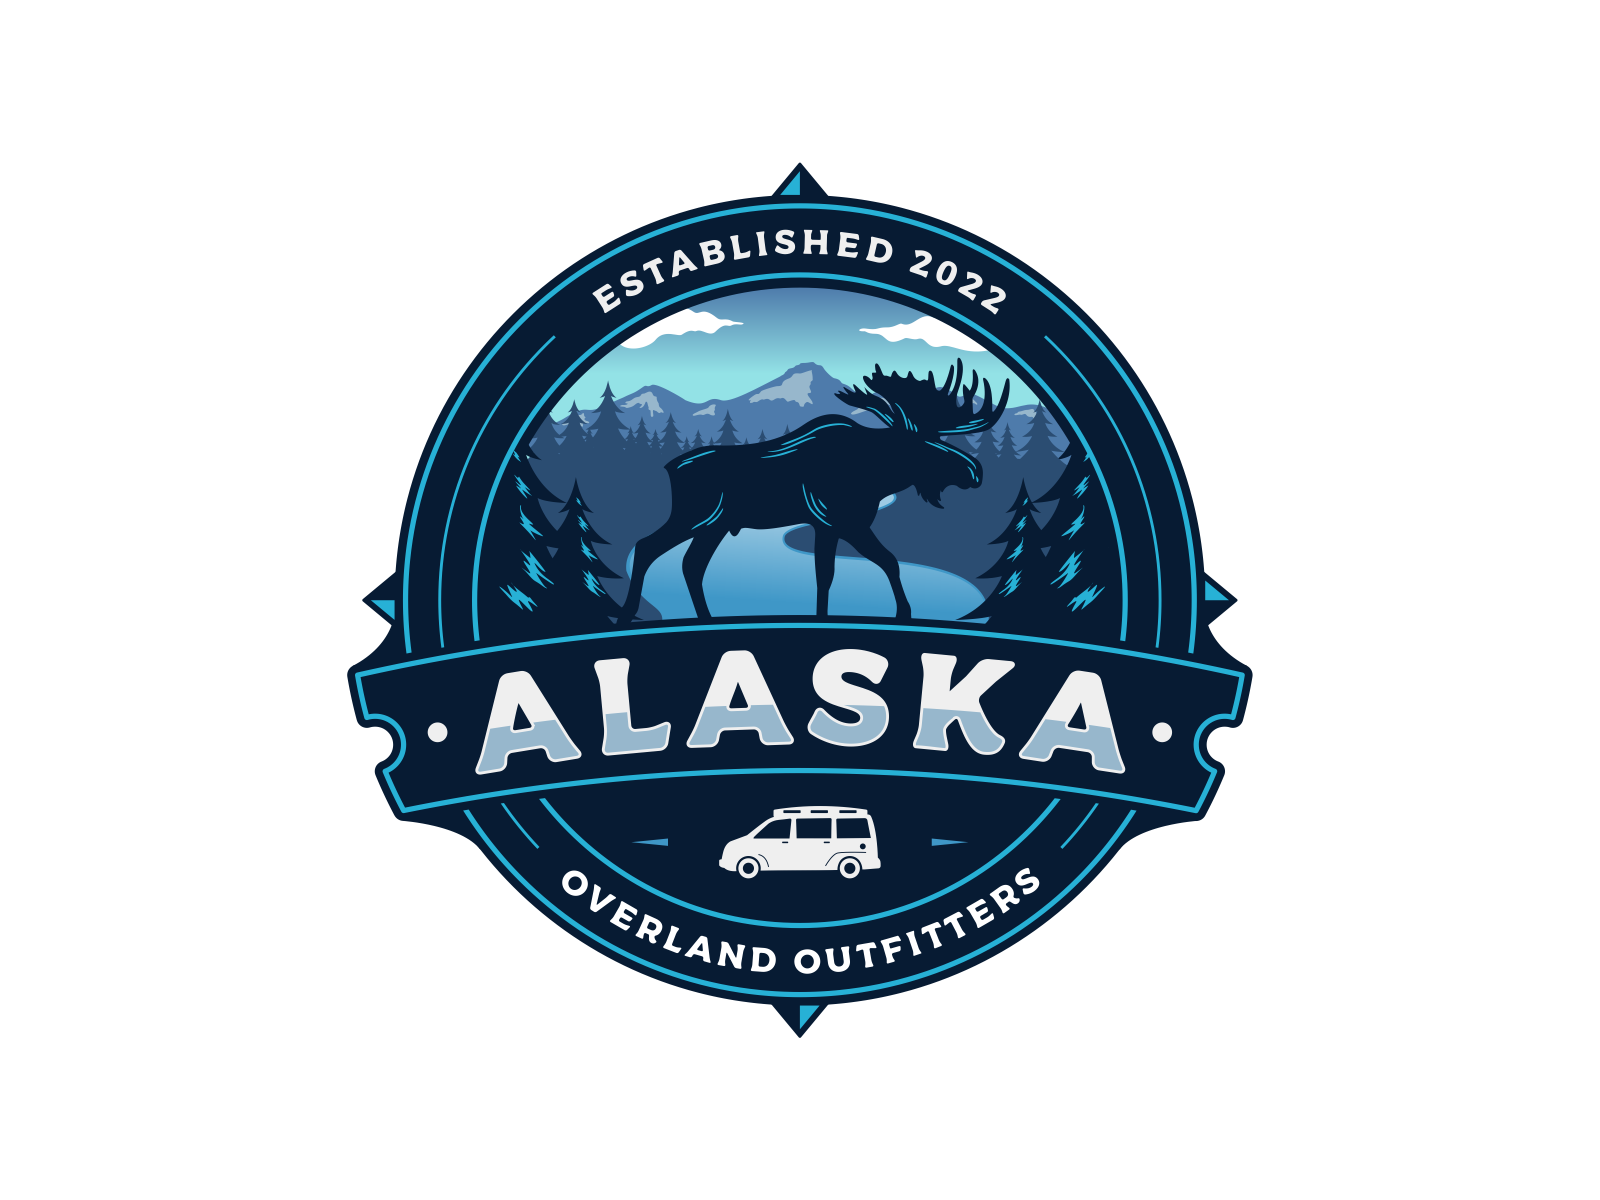 Alaska Overland Outfitters